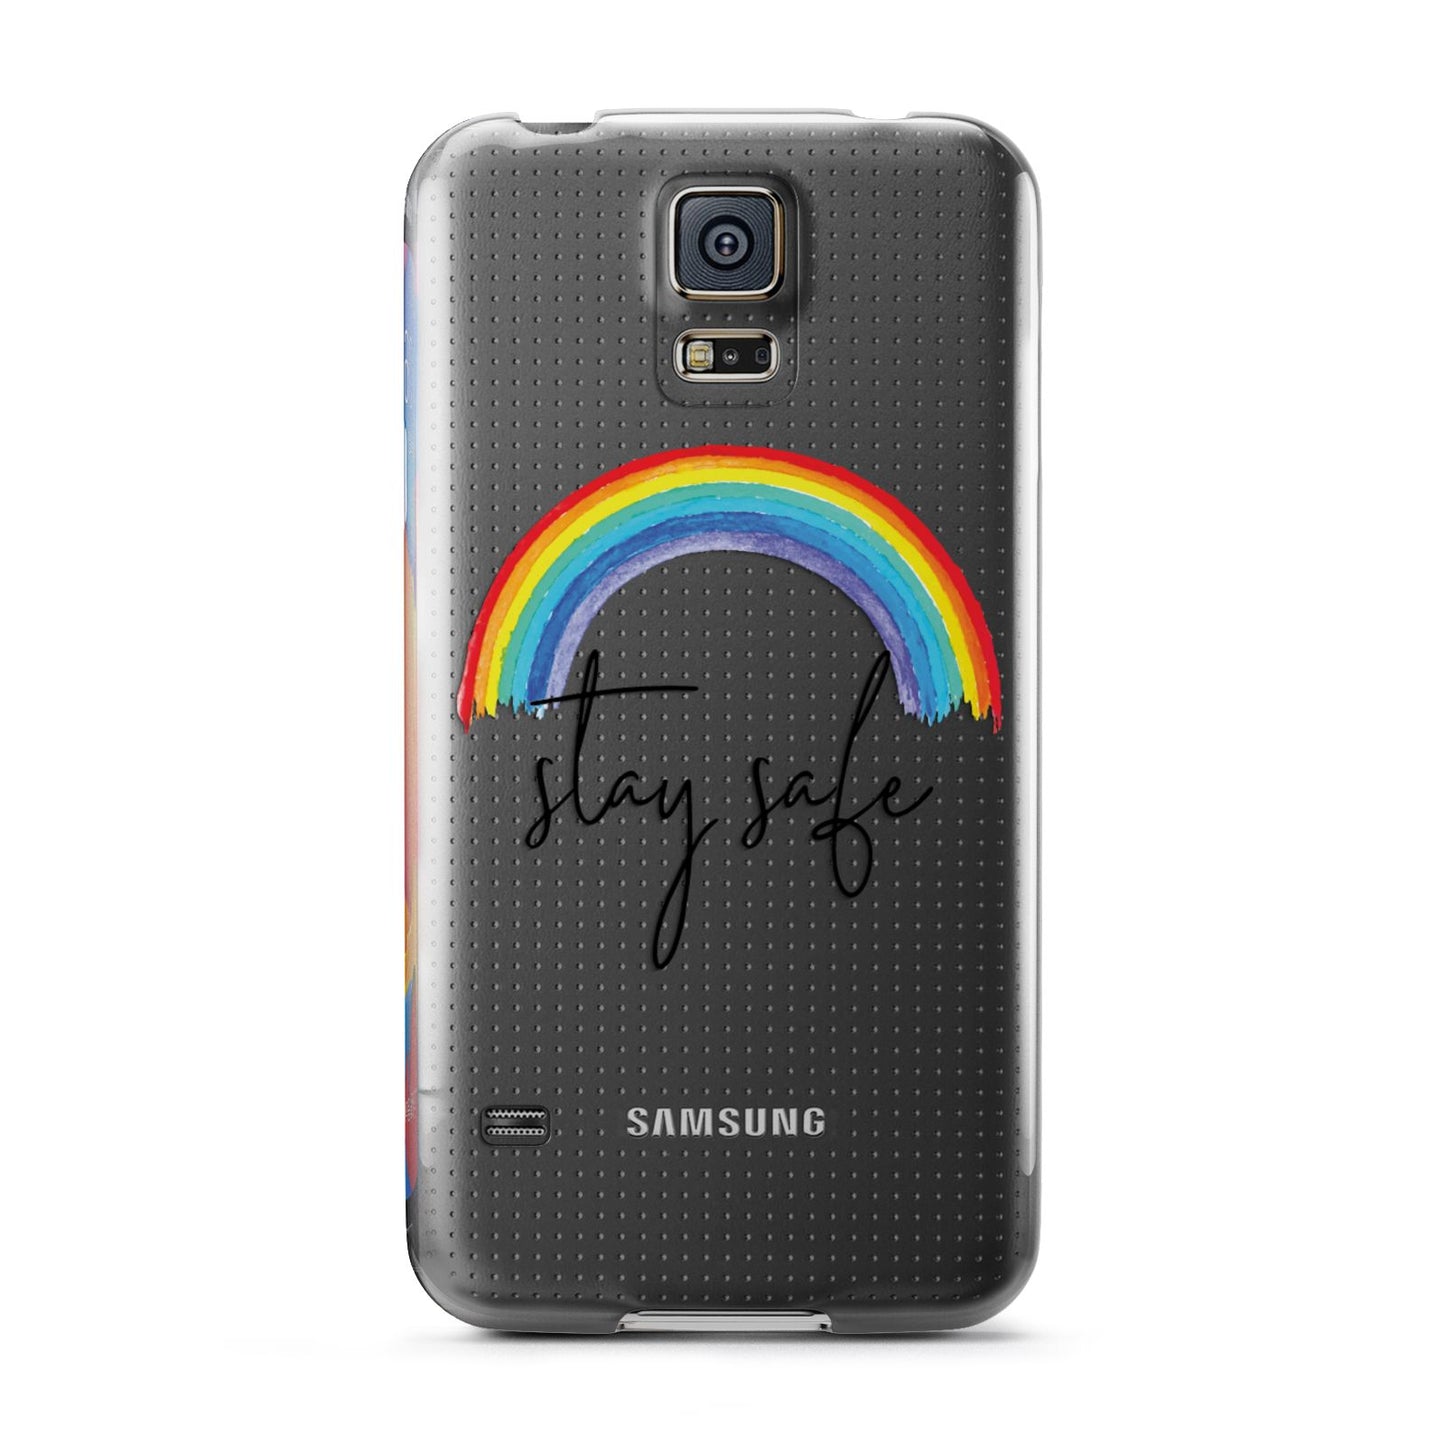 Stay Safe Rainbow Samsung Galaxy S5 Case